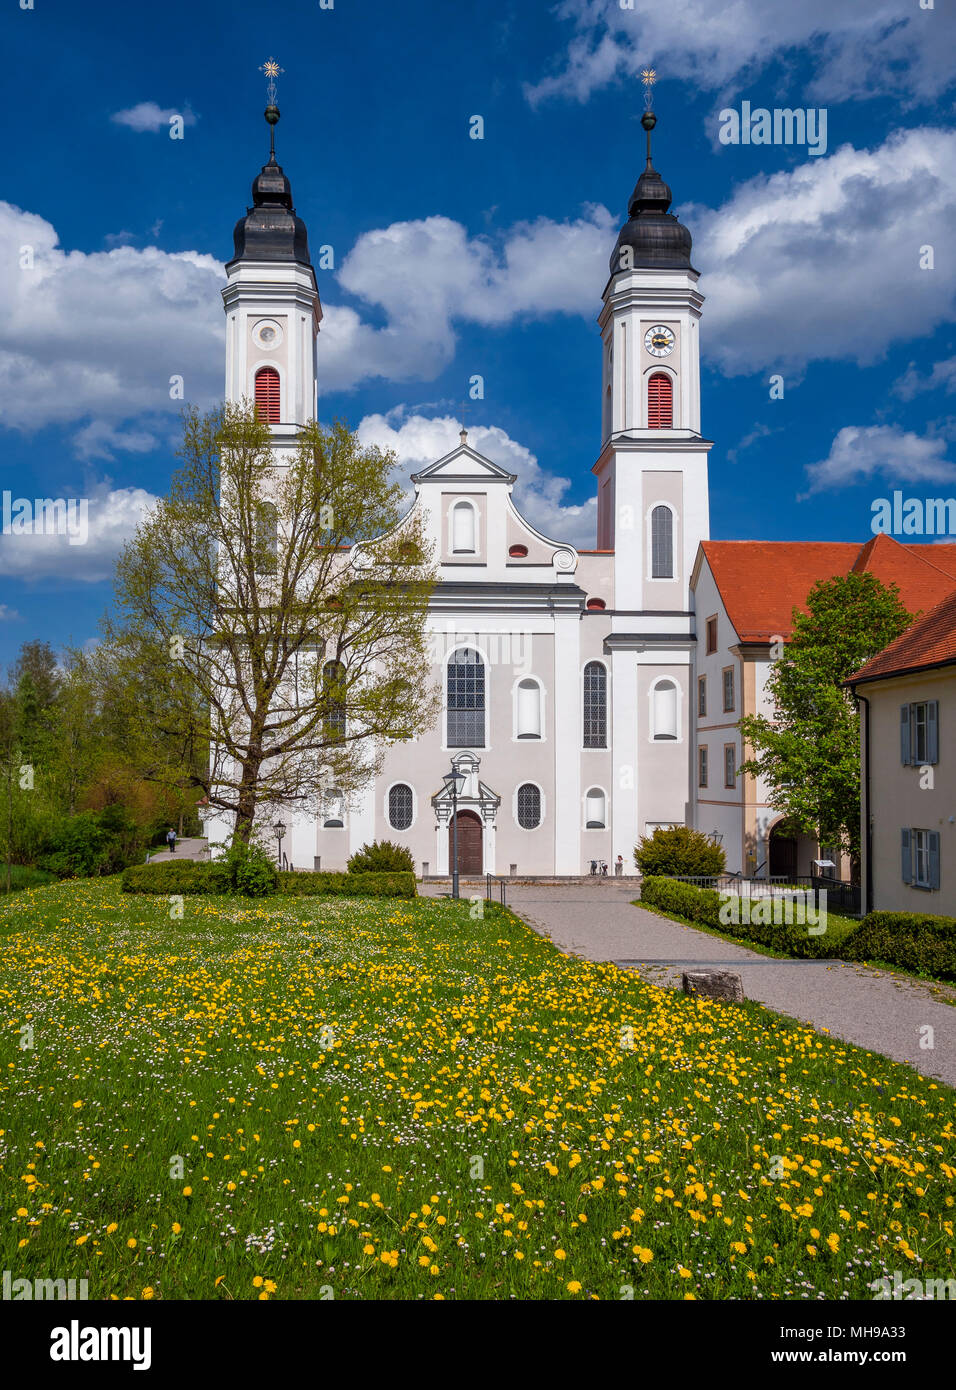 Monastère d'Irsee, Allgaeu, Bavaria, Germany, Europe Banque D'Images